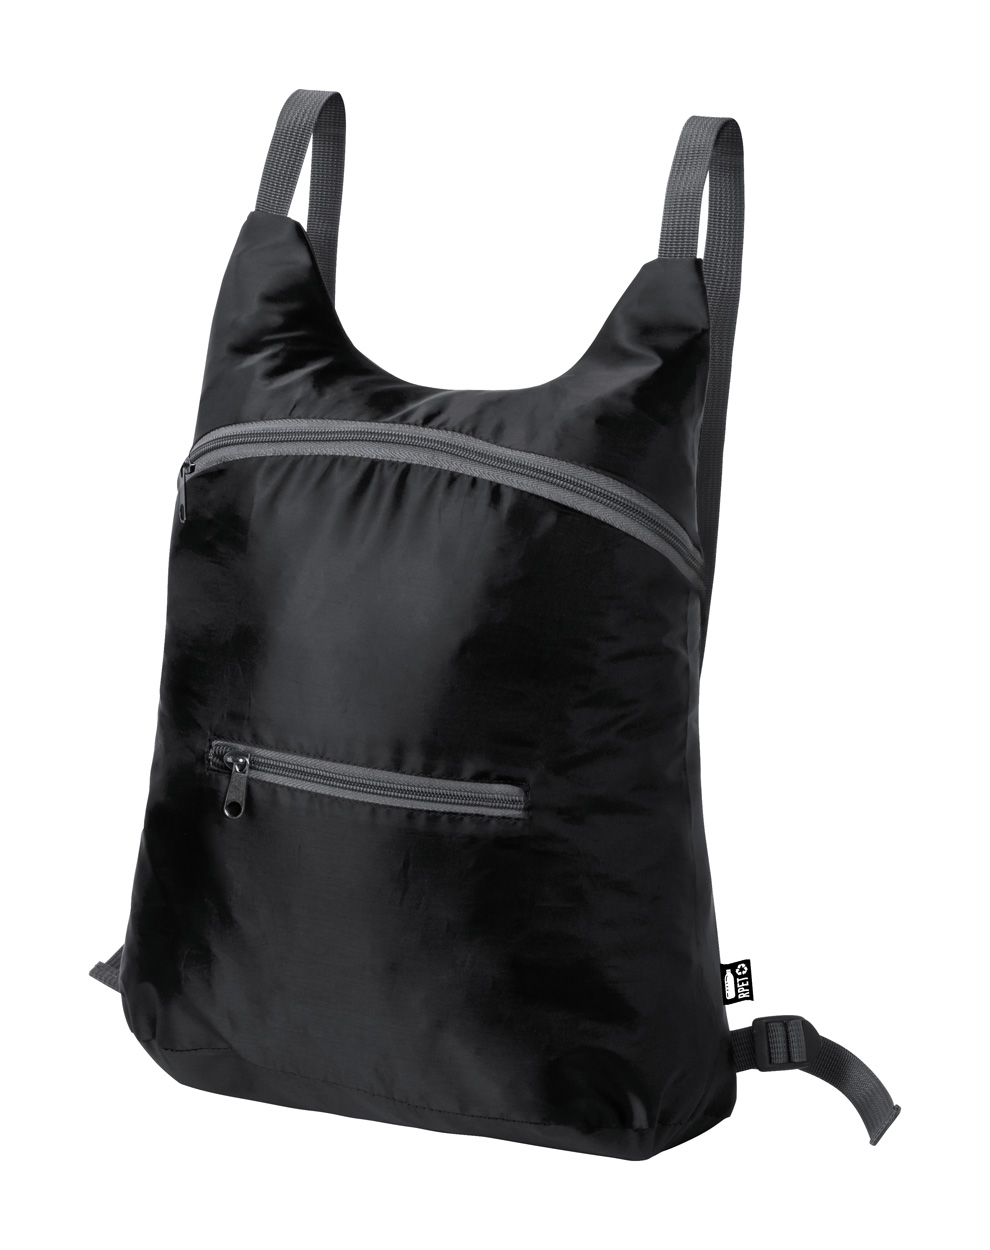 Brocky folding RPET backpack - black